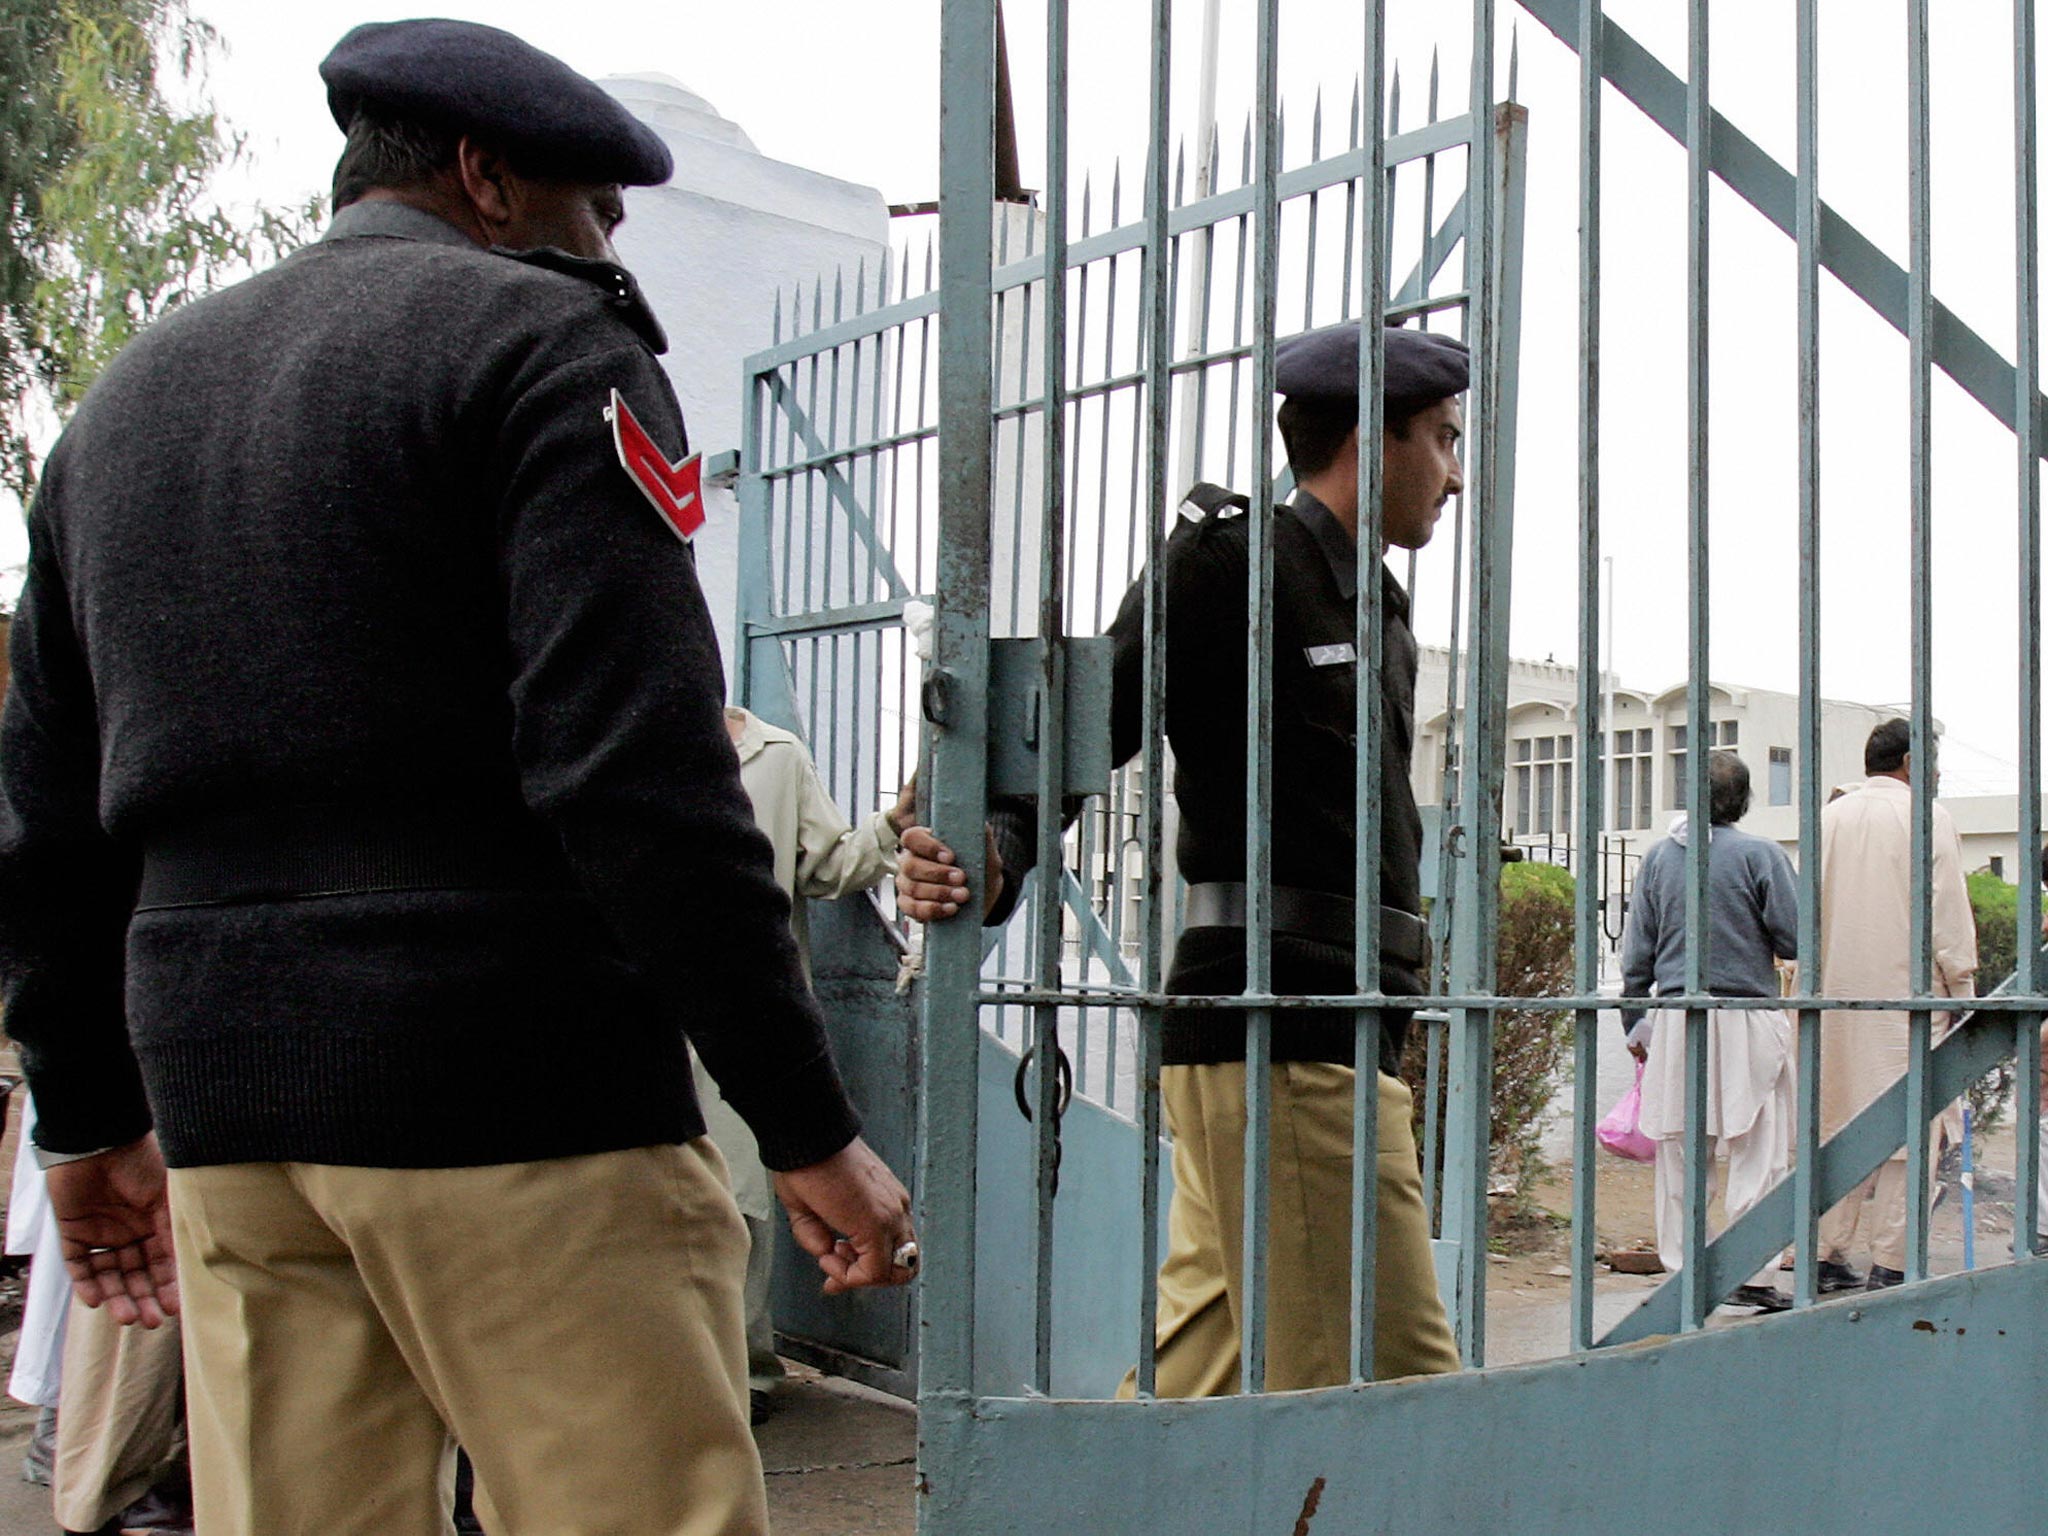 Adiala Jail in Rawalpindi where Mohammad Asghar is being held